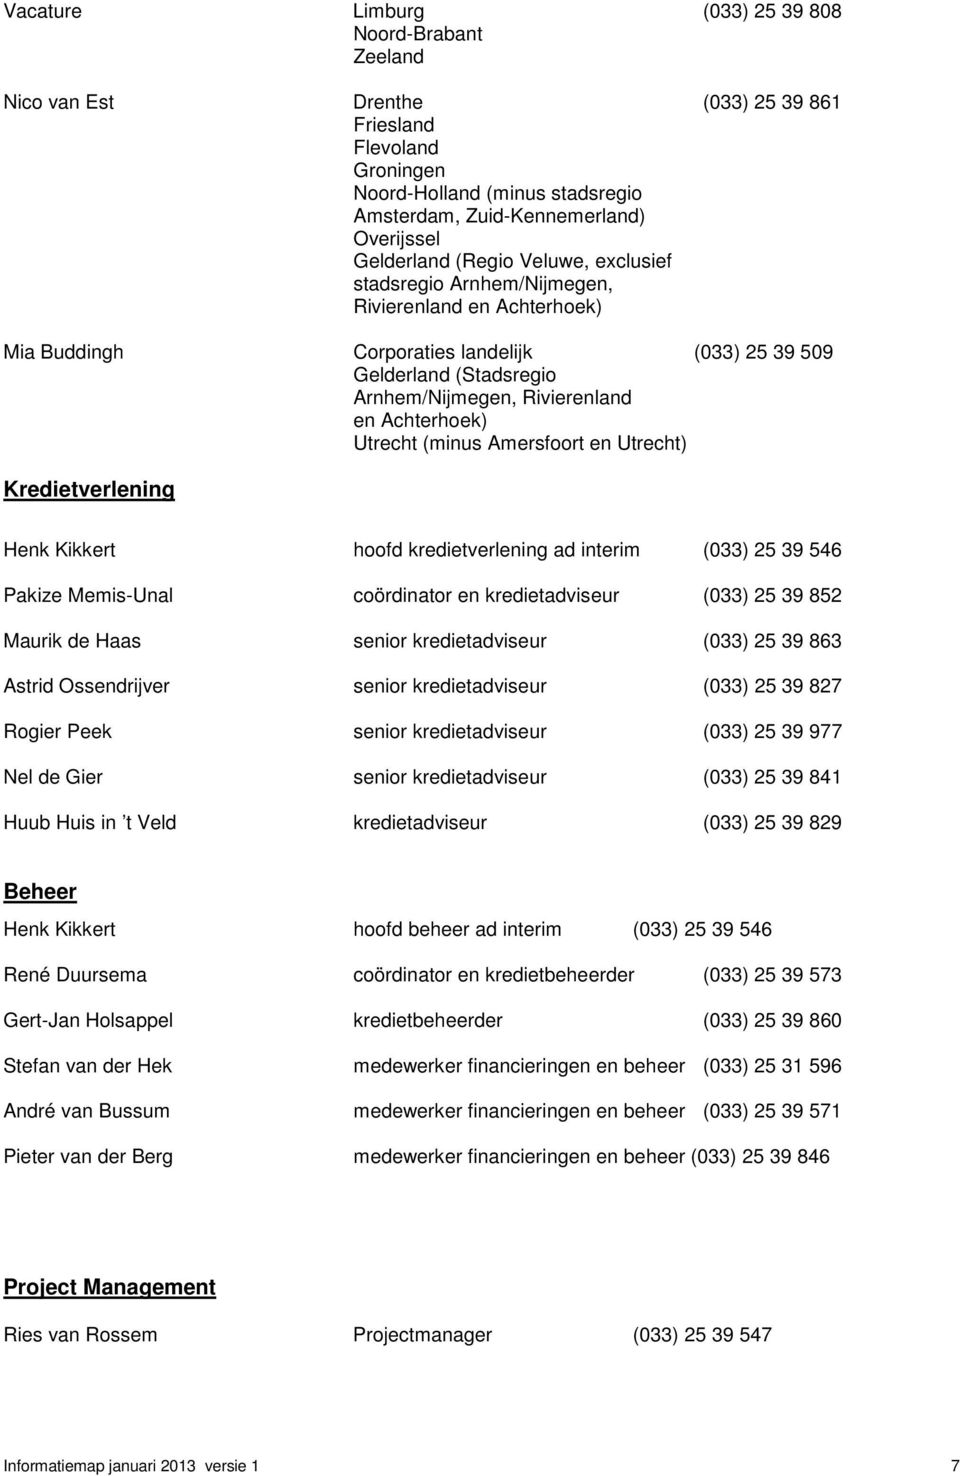 Achterhoek) Utrecht (minus Amersfoort en Utrecht) Kredietverlening Henk Kikkert hoofd kredietverlening ad interim (033) 25 39 546 Pakize Memis-Unal coördinator en kredietadviseur (033) 25 39 852